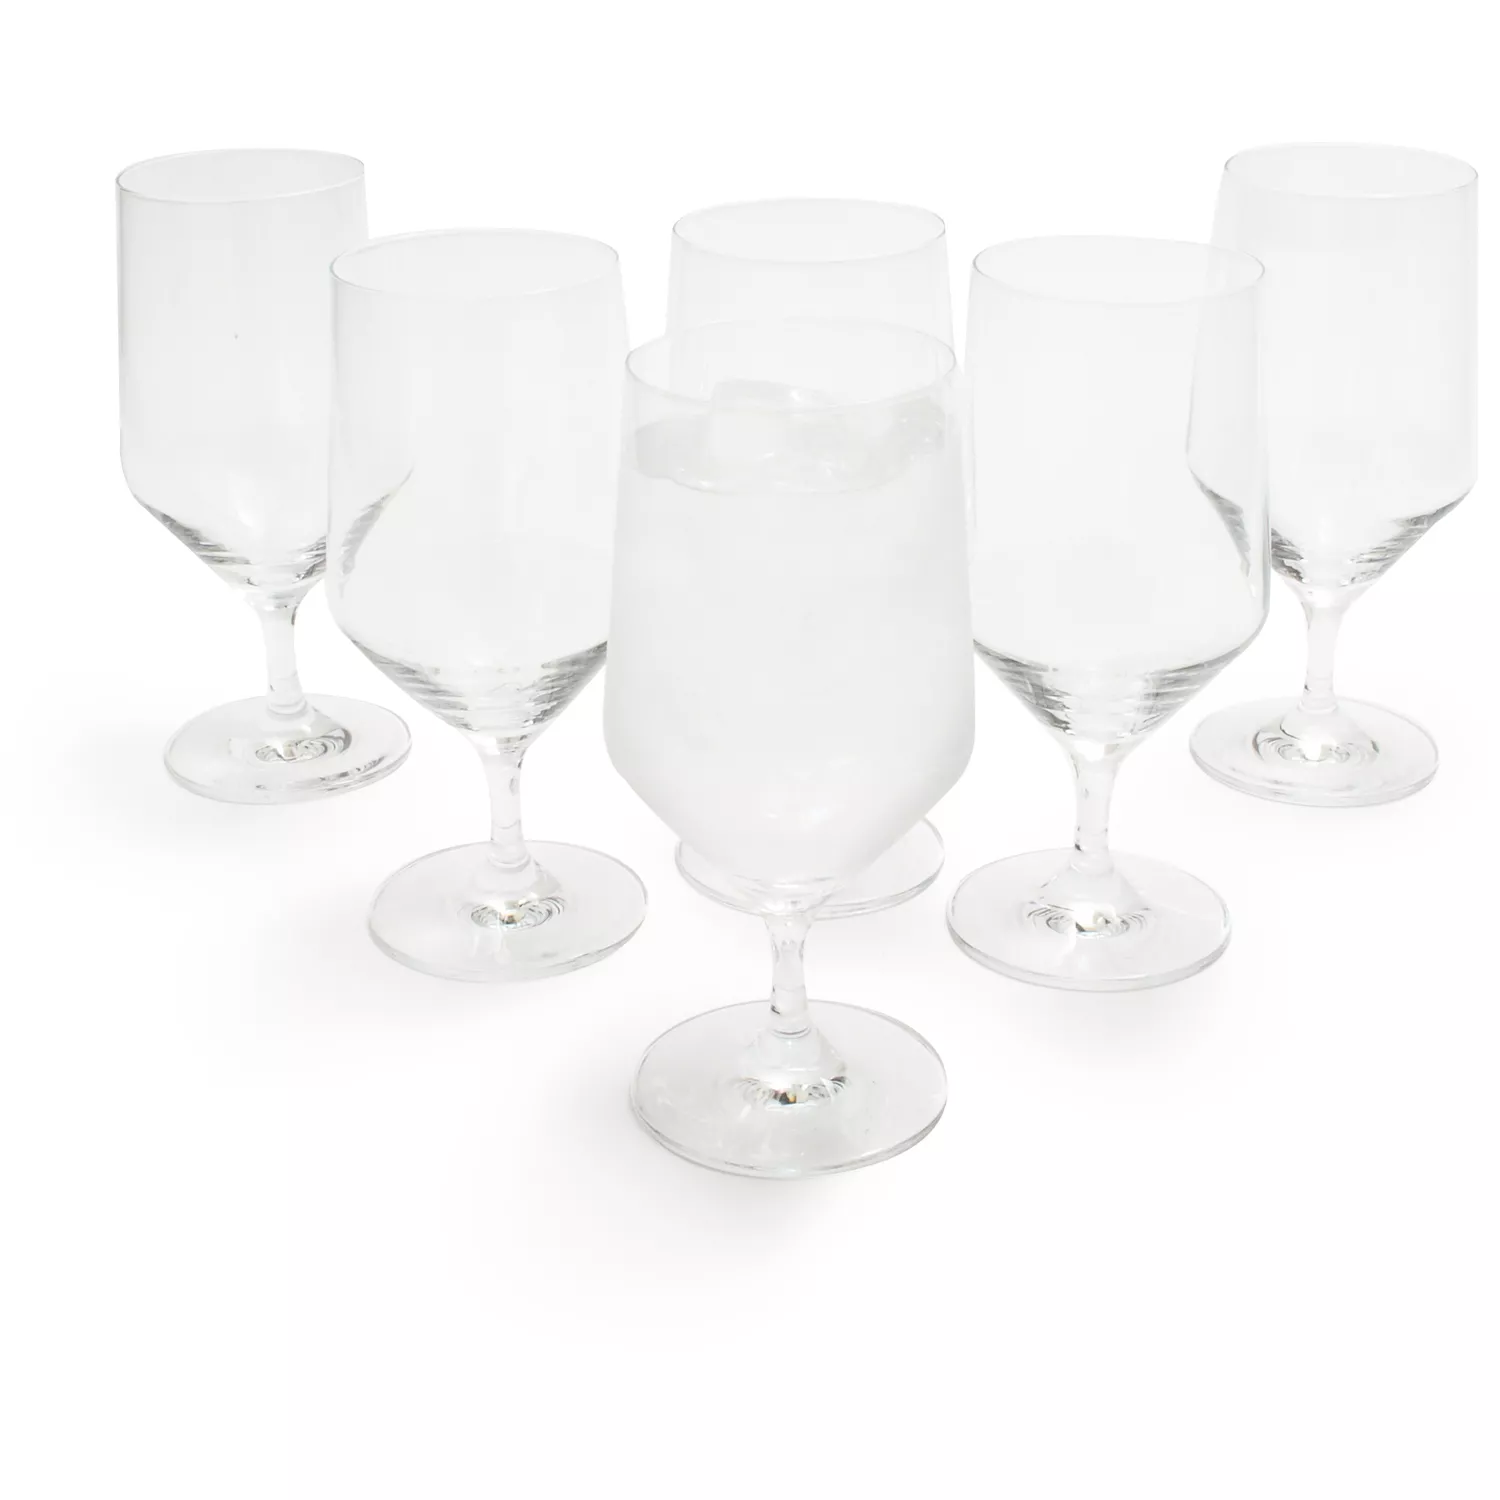 Schott Zwiesel Vina Red & White Wine Glass / Water Goblet (Set of 6)